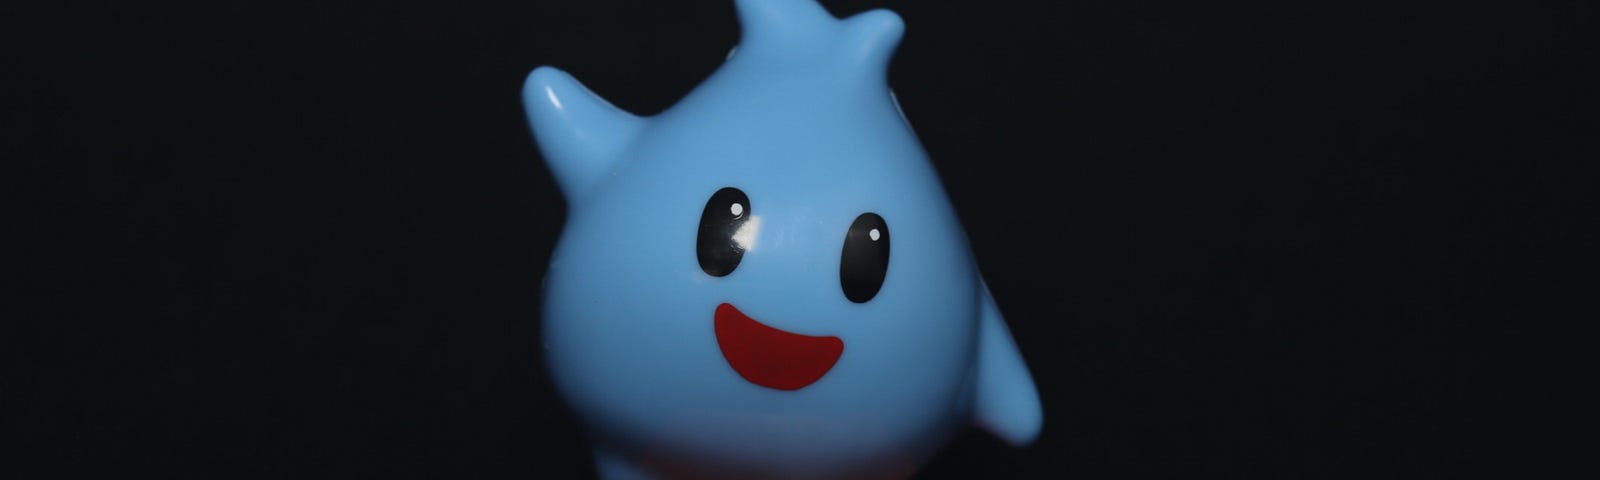 A blue cartoon character